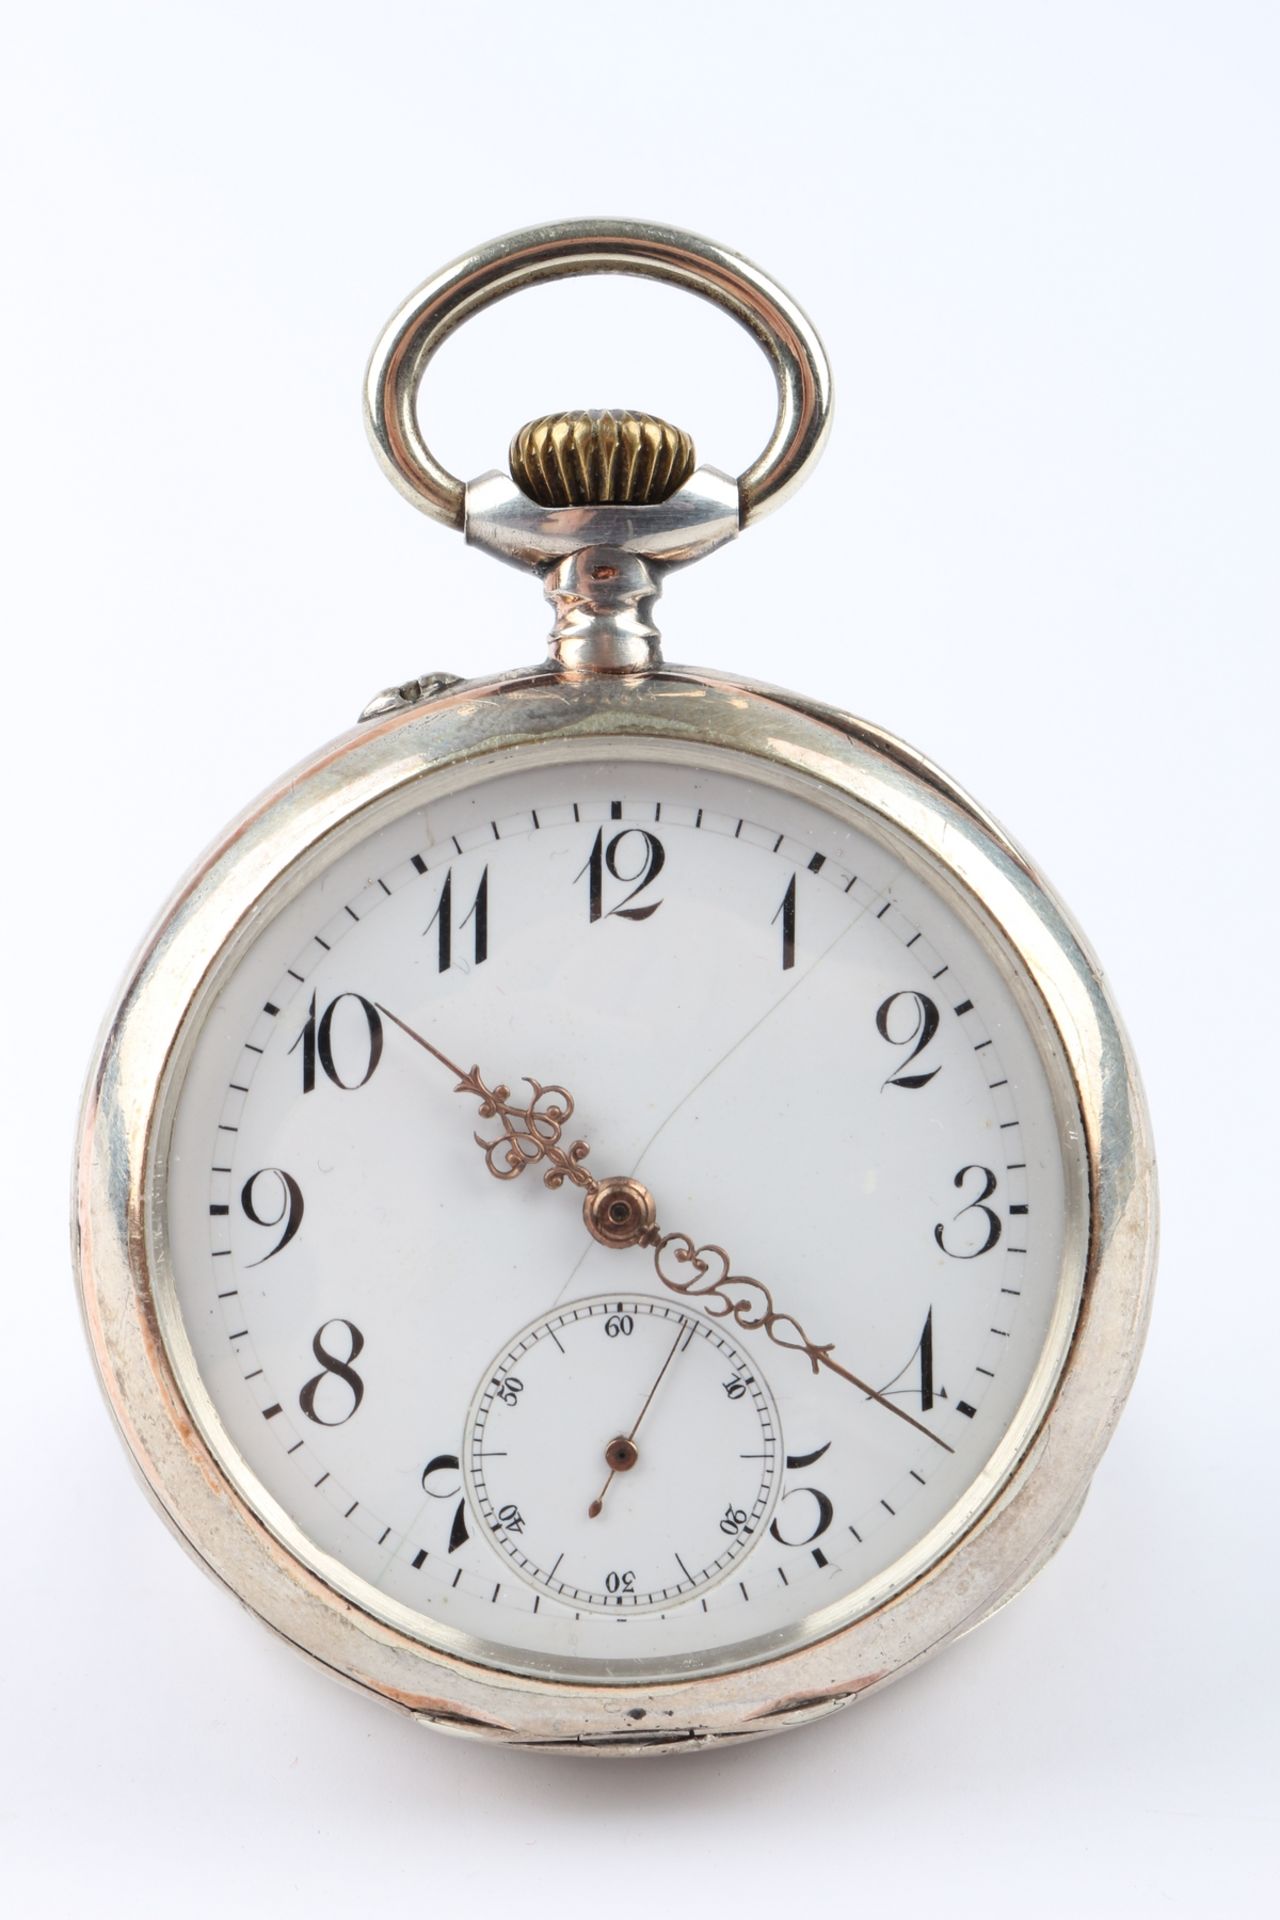 Jugendstil 2 Silber Taschenuhren, art nouveau silver pocket watches, - Image 6 of 9